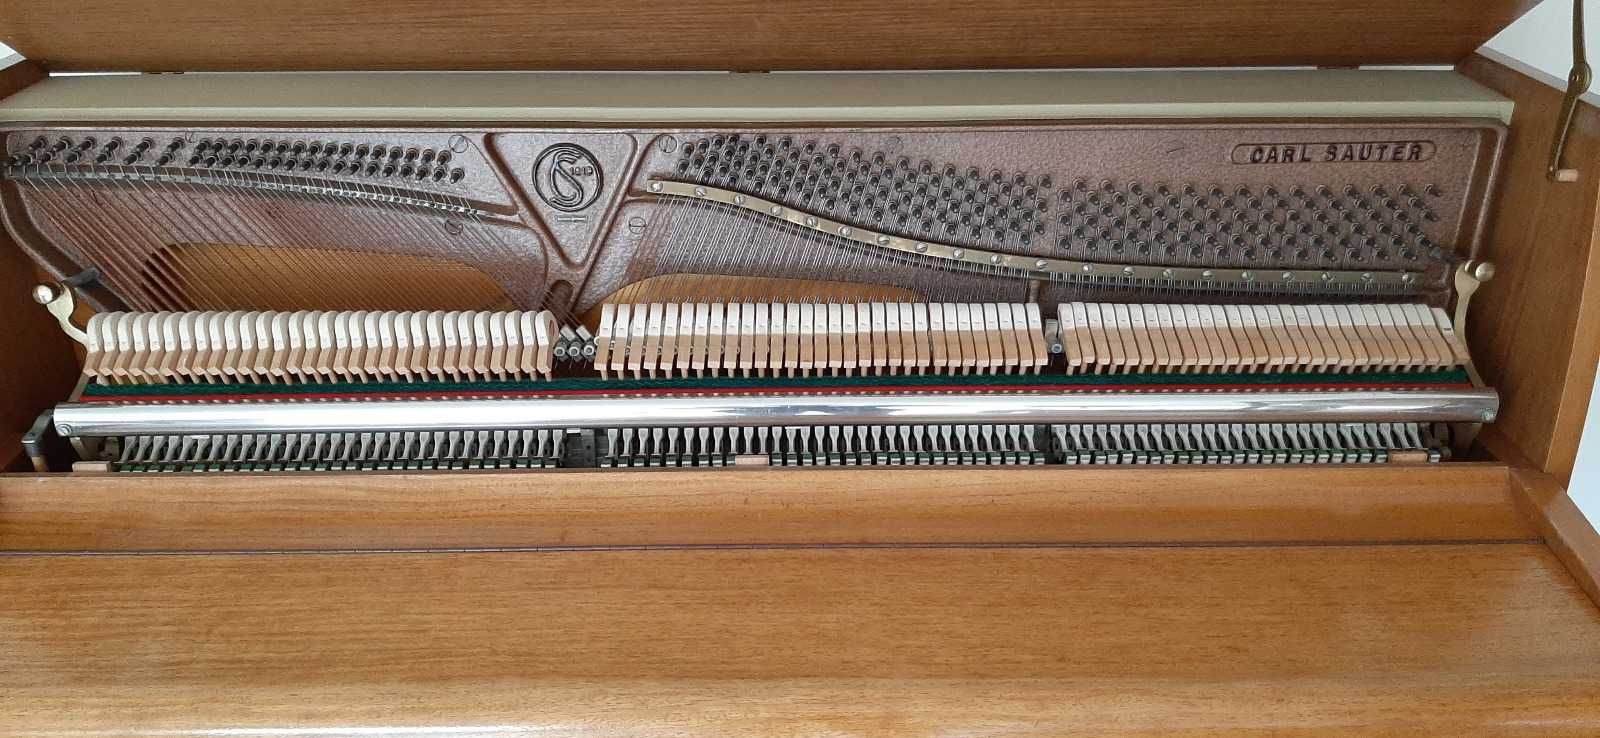 Piano Sauter, Fabricado na Alemanha, 7 Oitavas, Tipo Studio